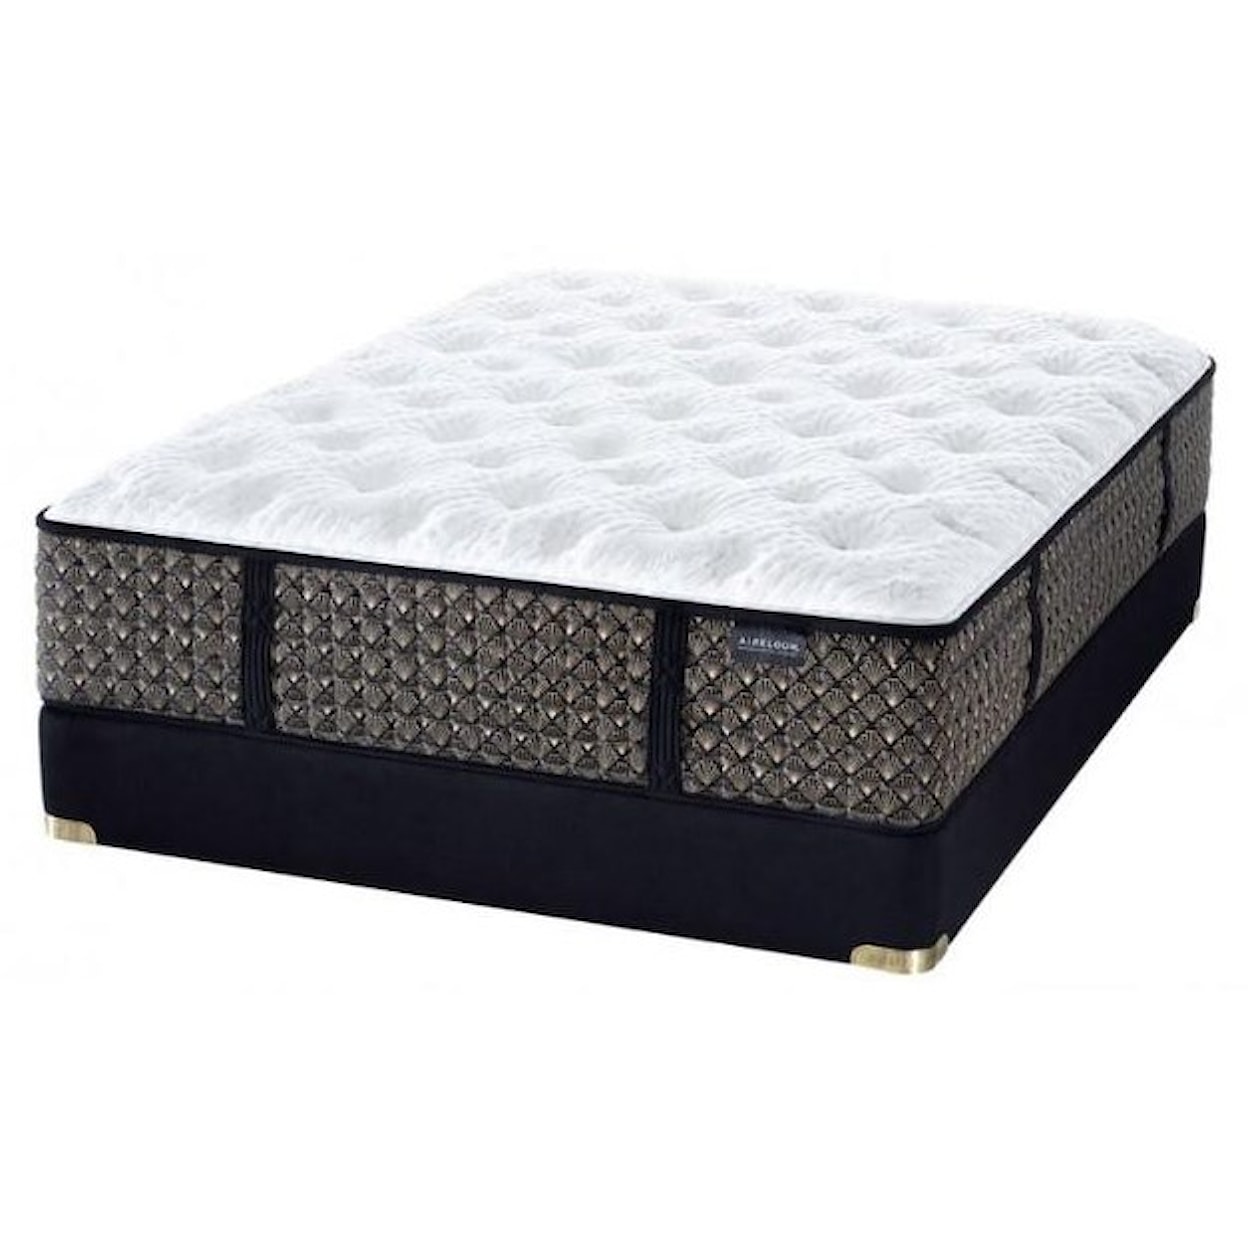 Aireloom Bedding Preferred Streamline™ Luxury Firm King 14" Luxury Firm Mattress